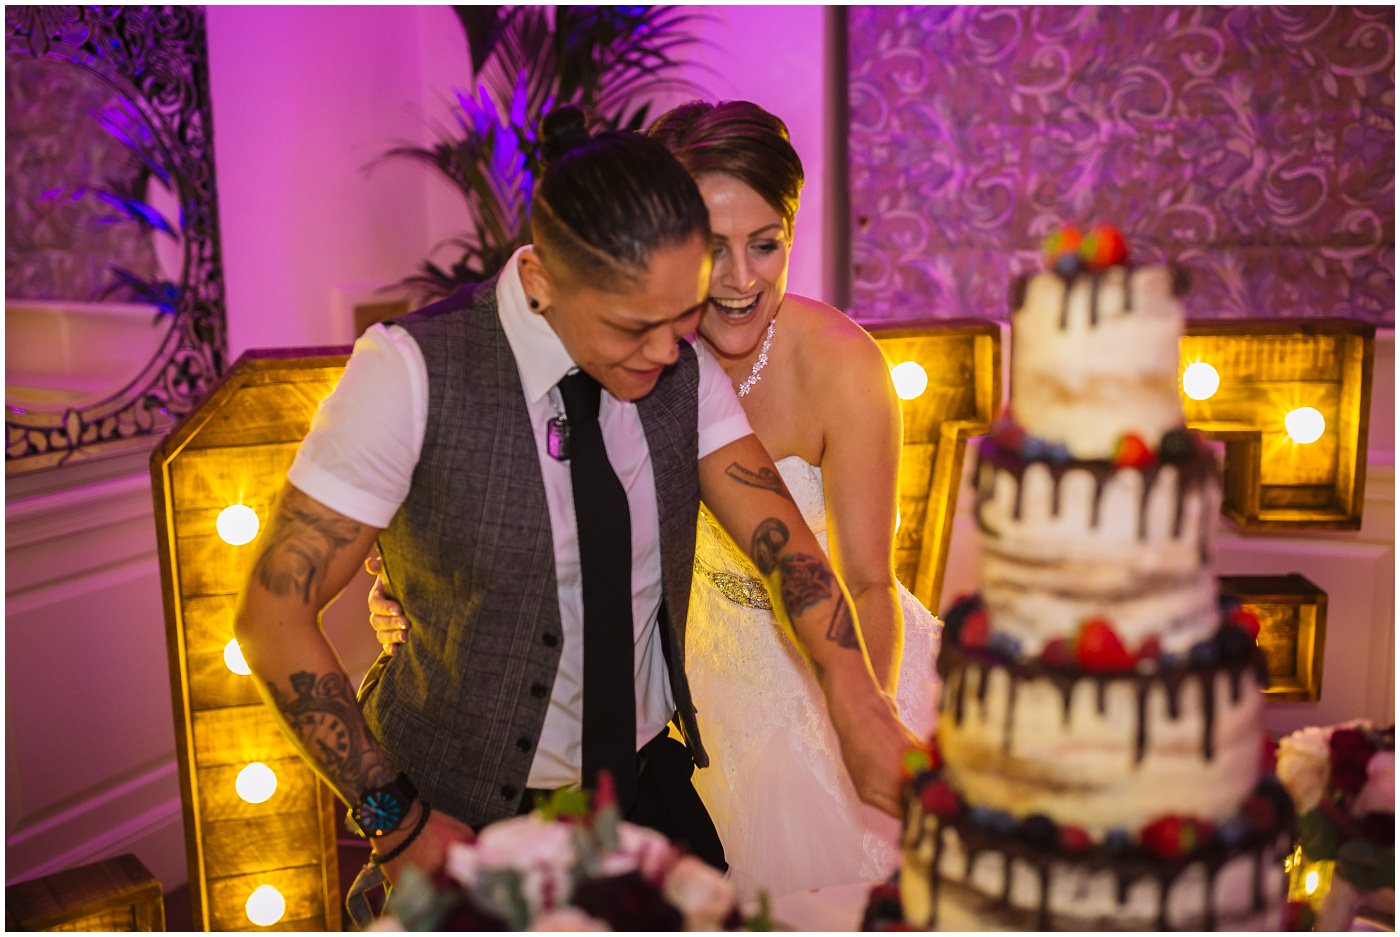 Brides cut incredible wedding cake